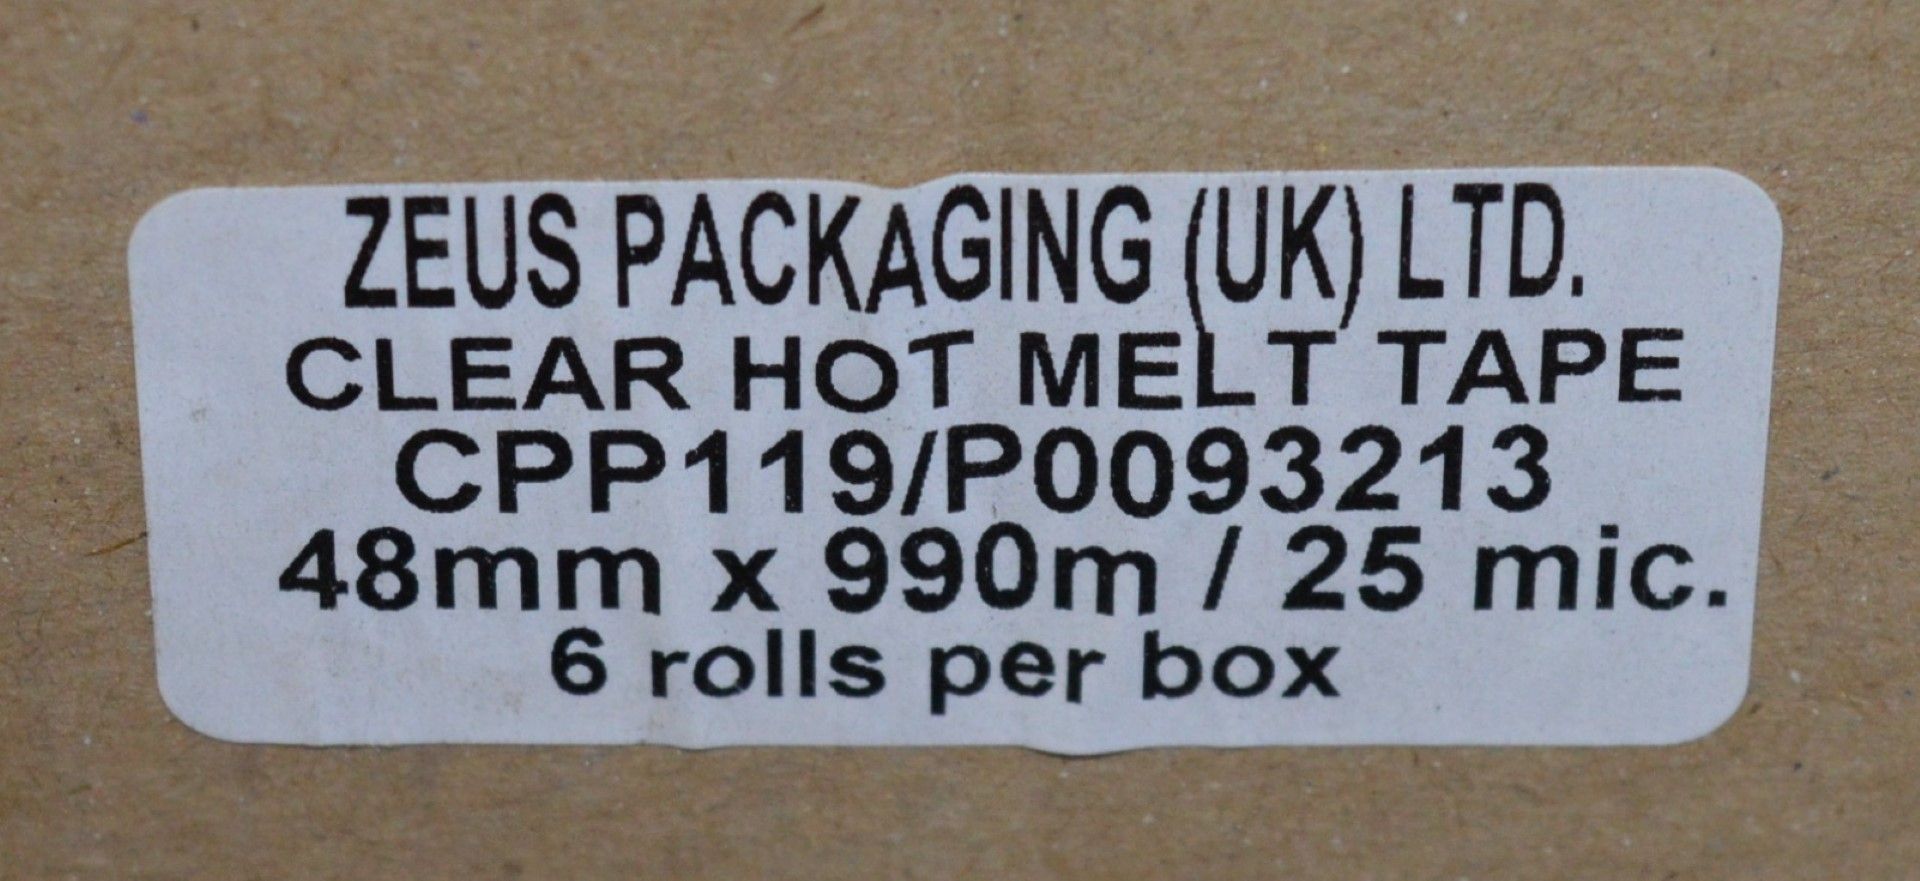 6 x Rolls of Clear Hot Melt Tape - 48mm x 990m Per Roll - CL185 - Unused Stock - Ref DRT0058 - - Image 3 of 4